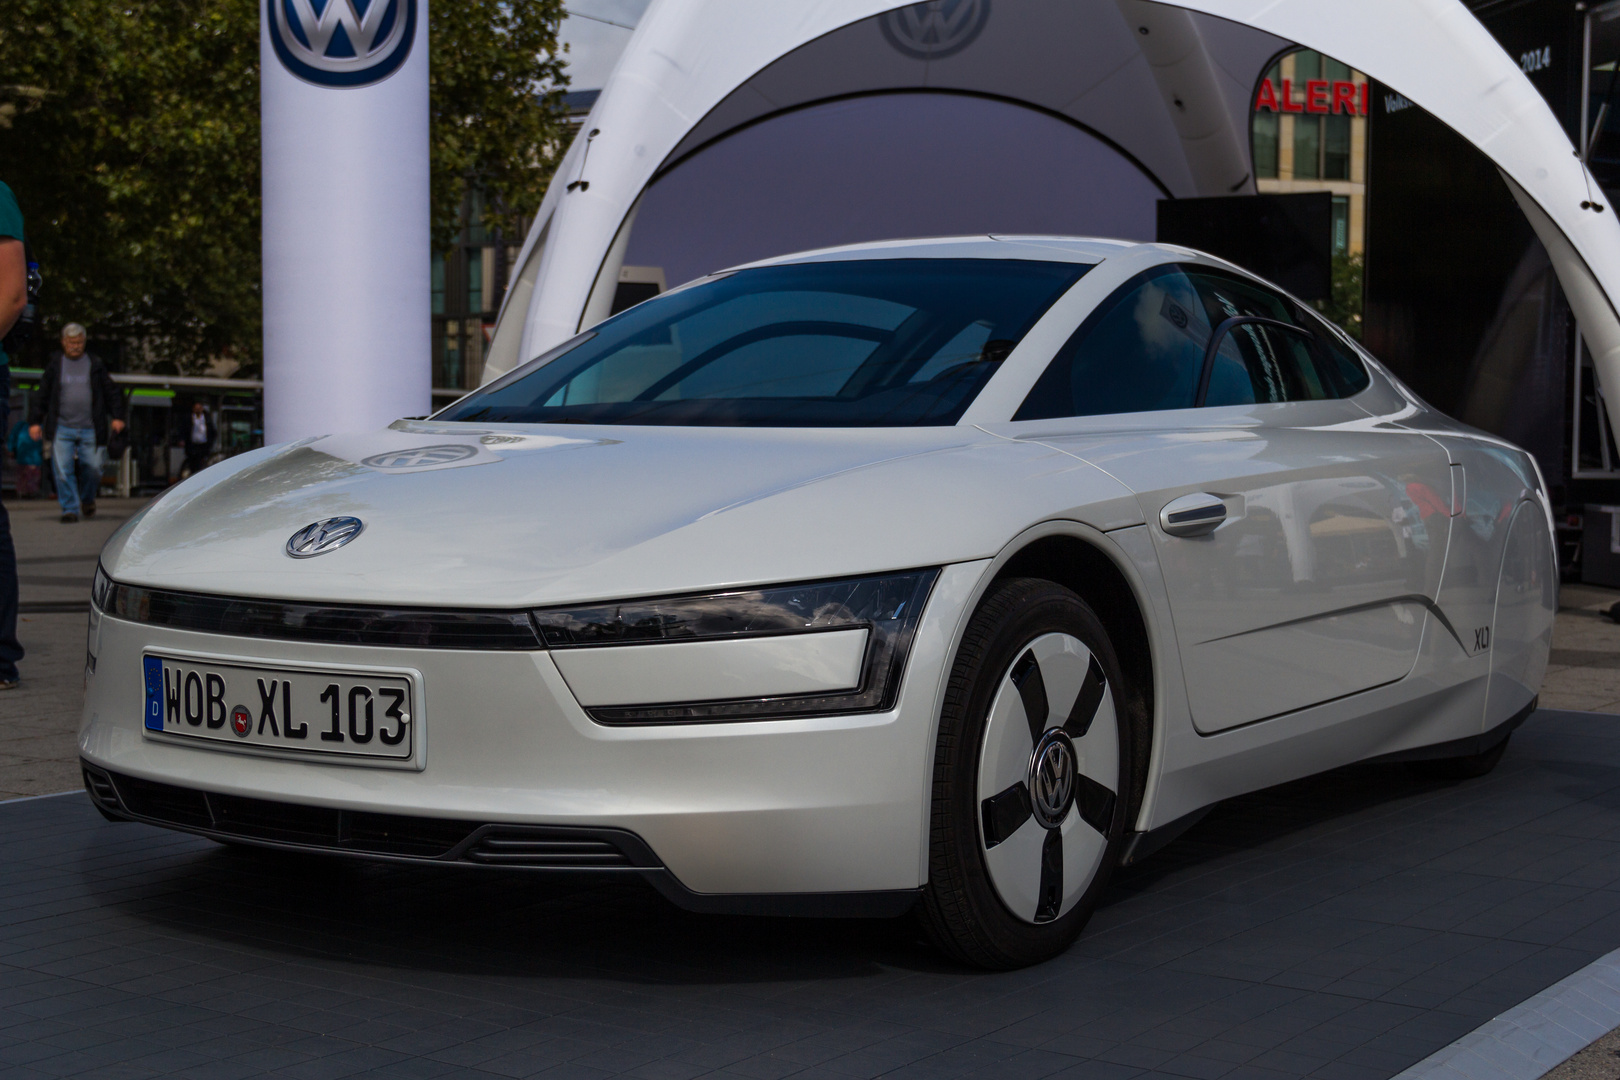 VW Tour 2014